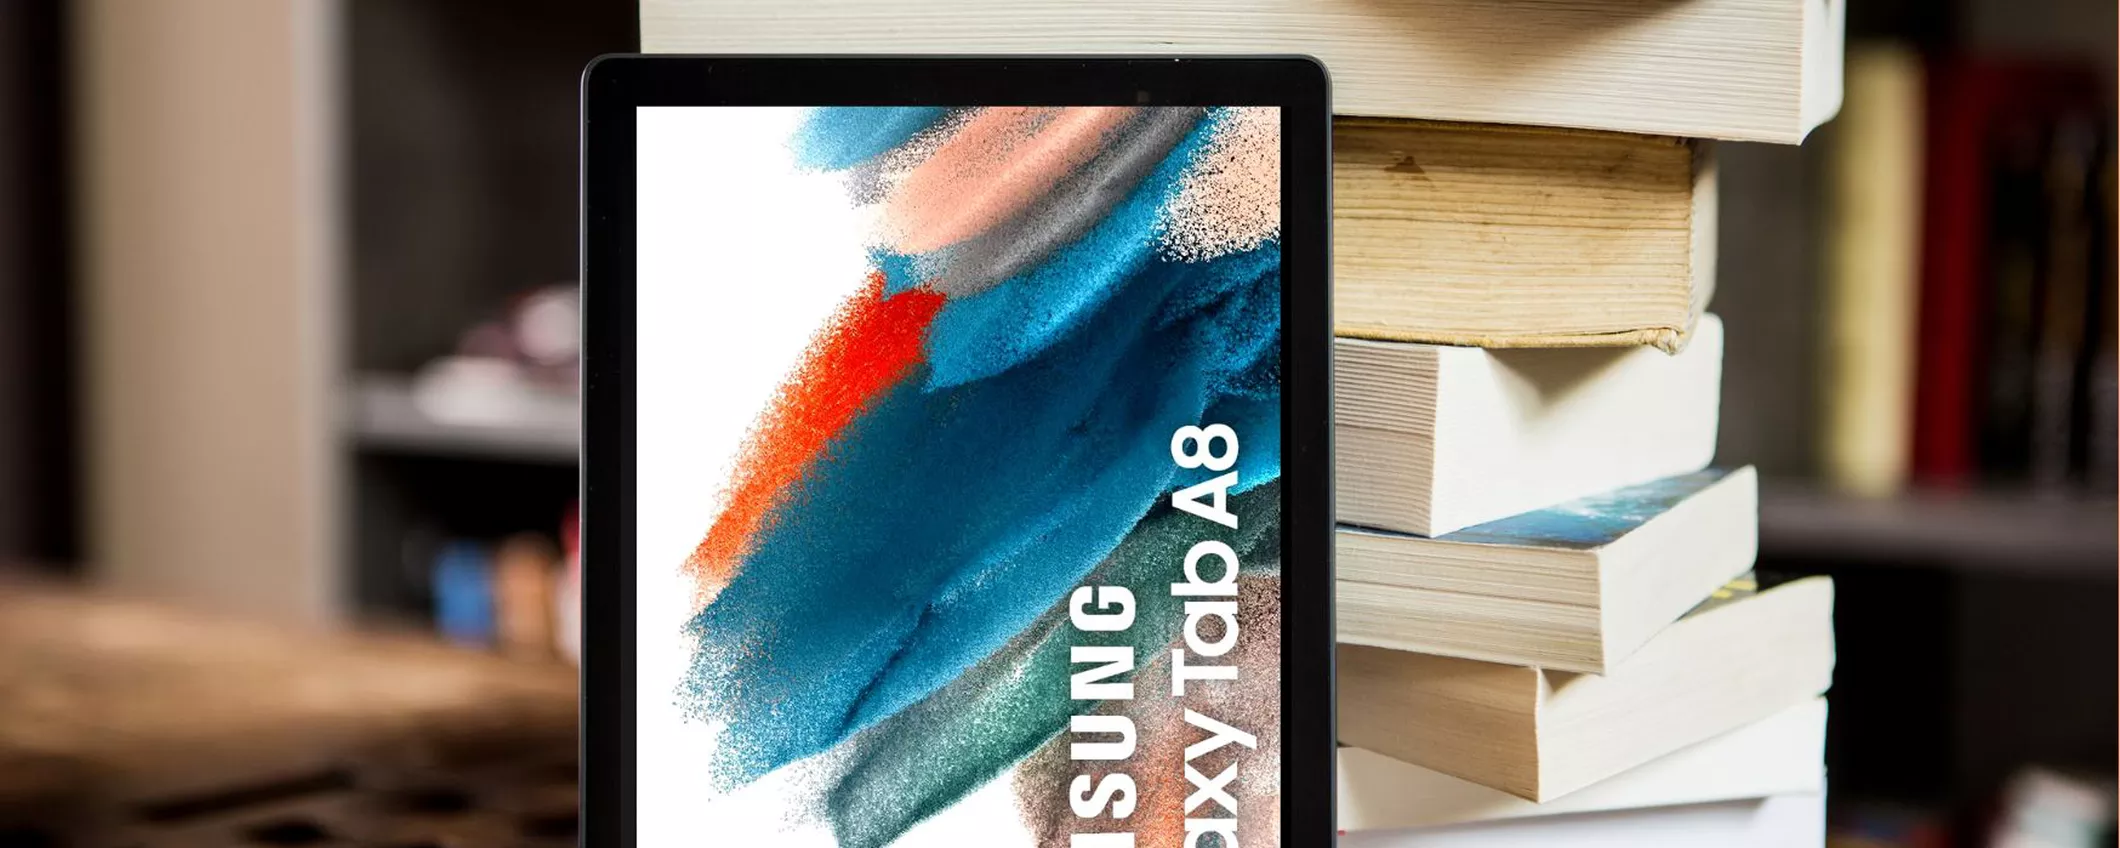 Samsung Galaxy Tab A8, il MIGLIOR tablet della gamma è best buy con lo sconto